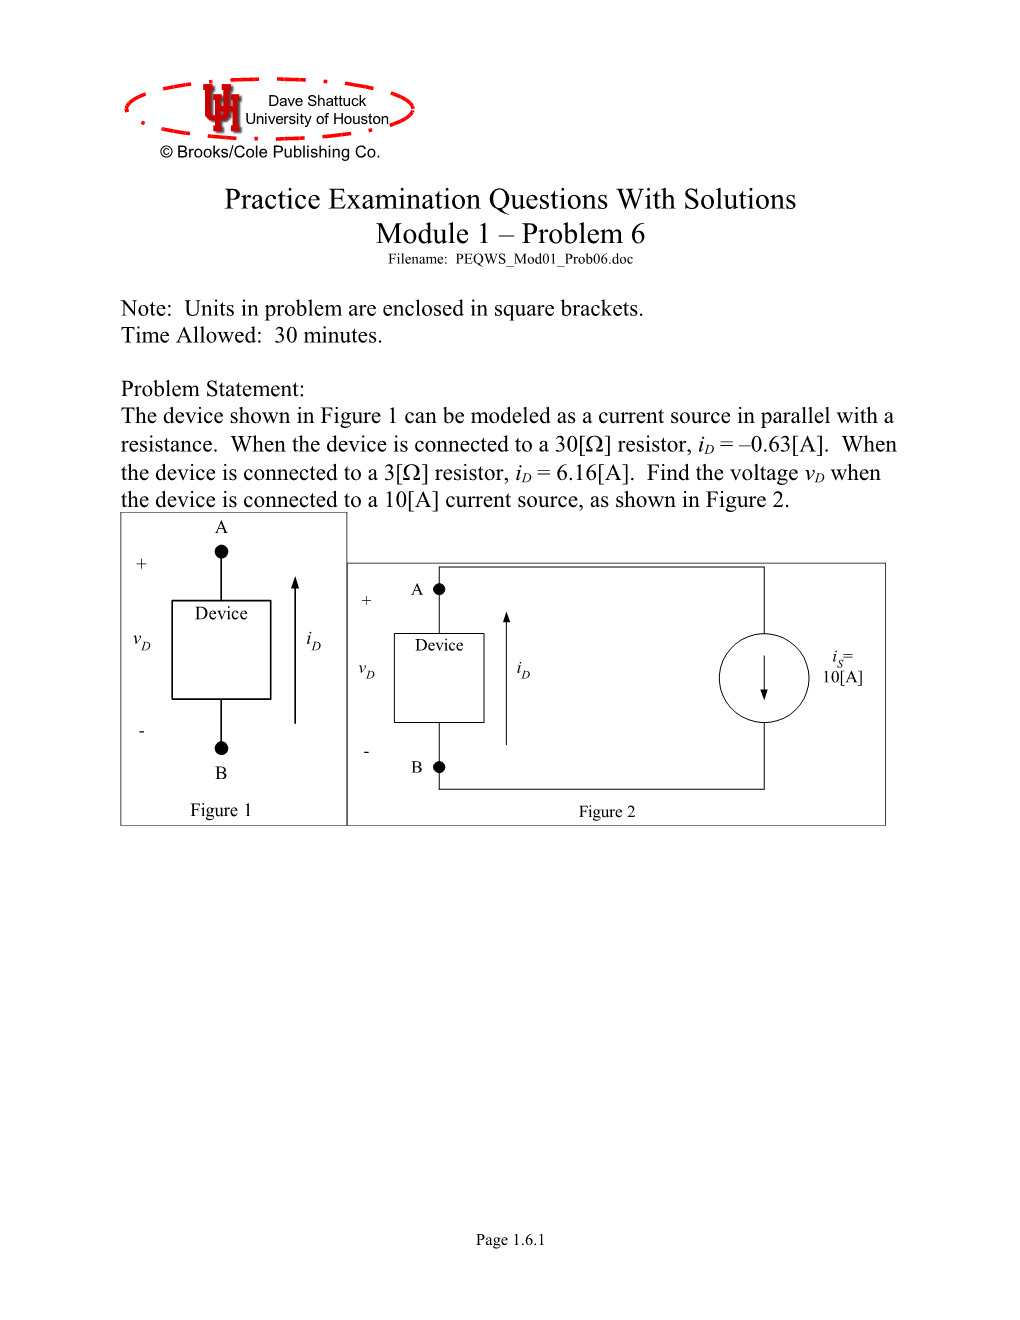 Practice Examination Module 1 Problem 6